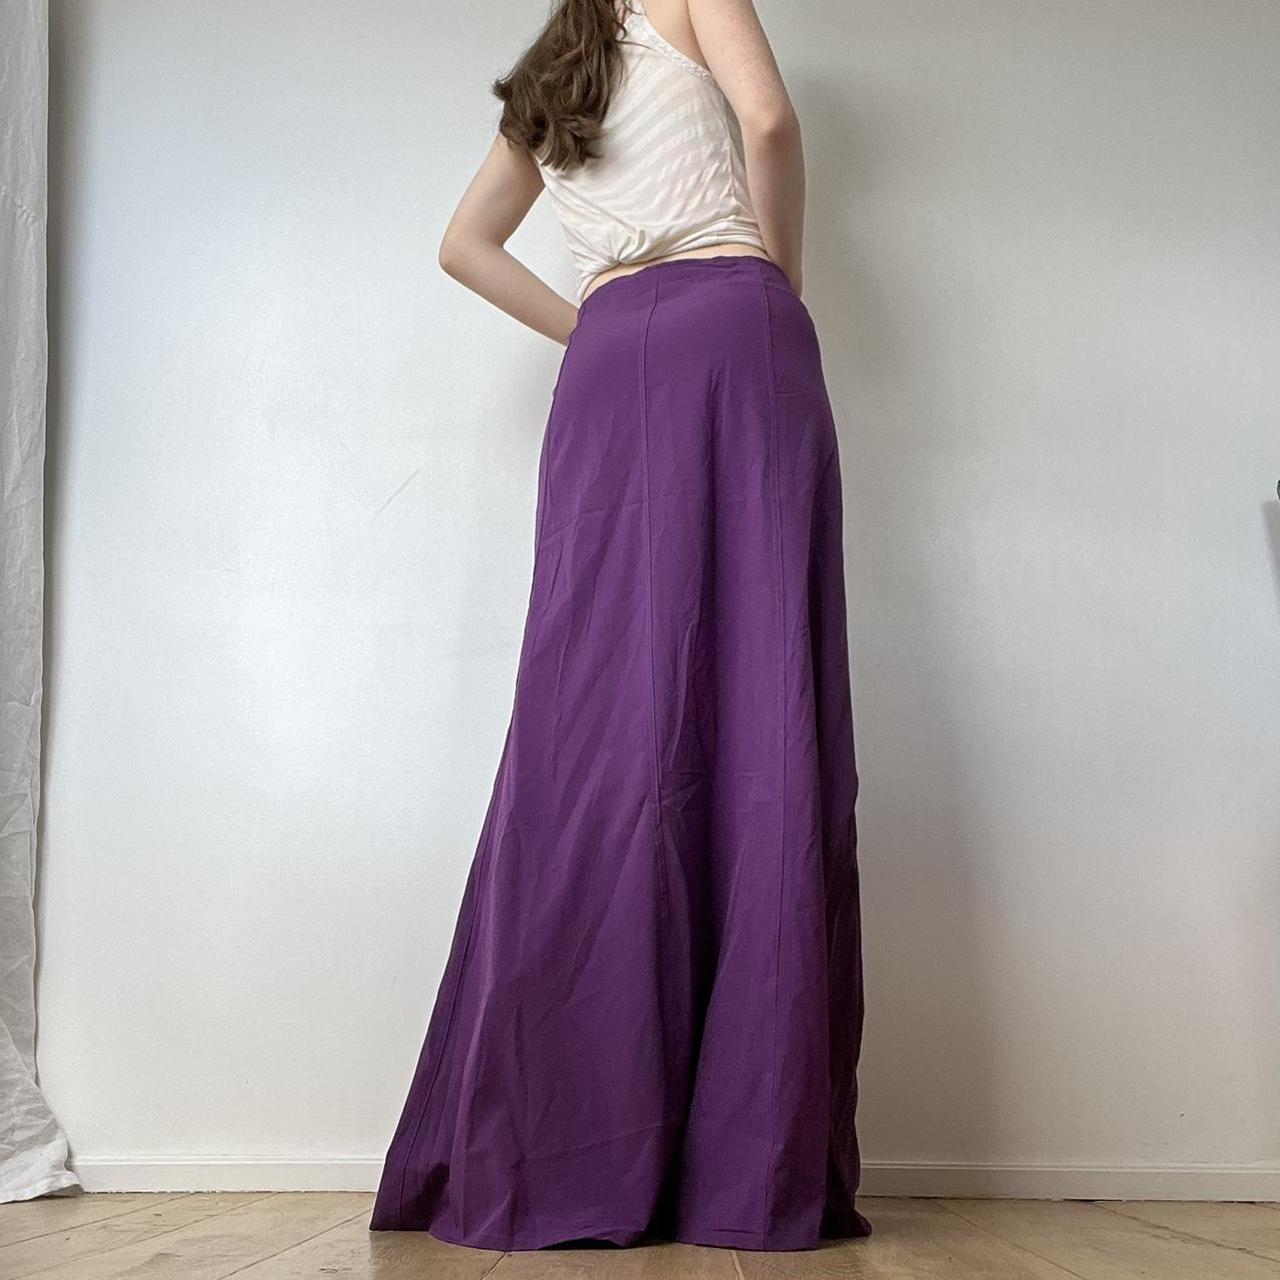 Purple maxi skirt - parachute panelled flare skirt... - Depop